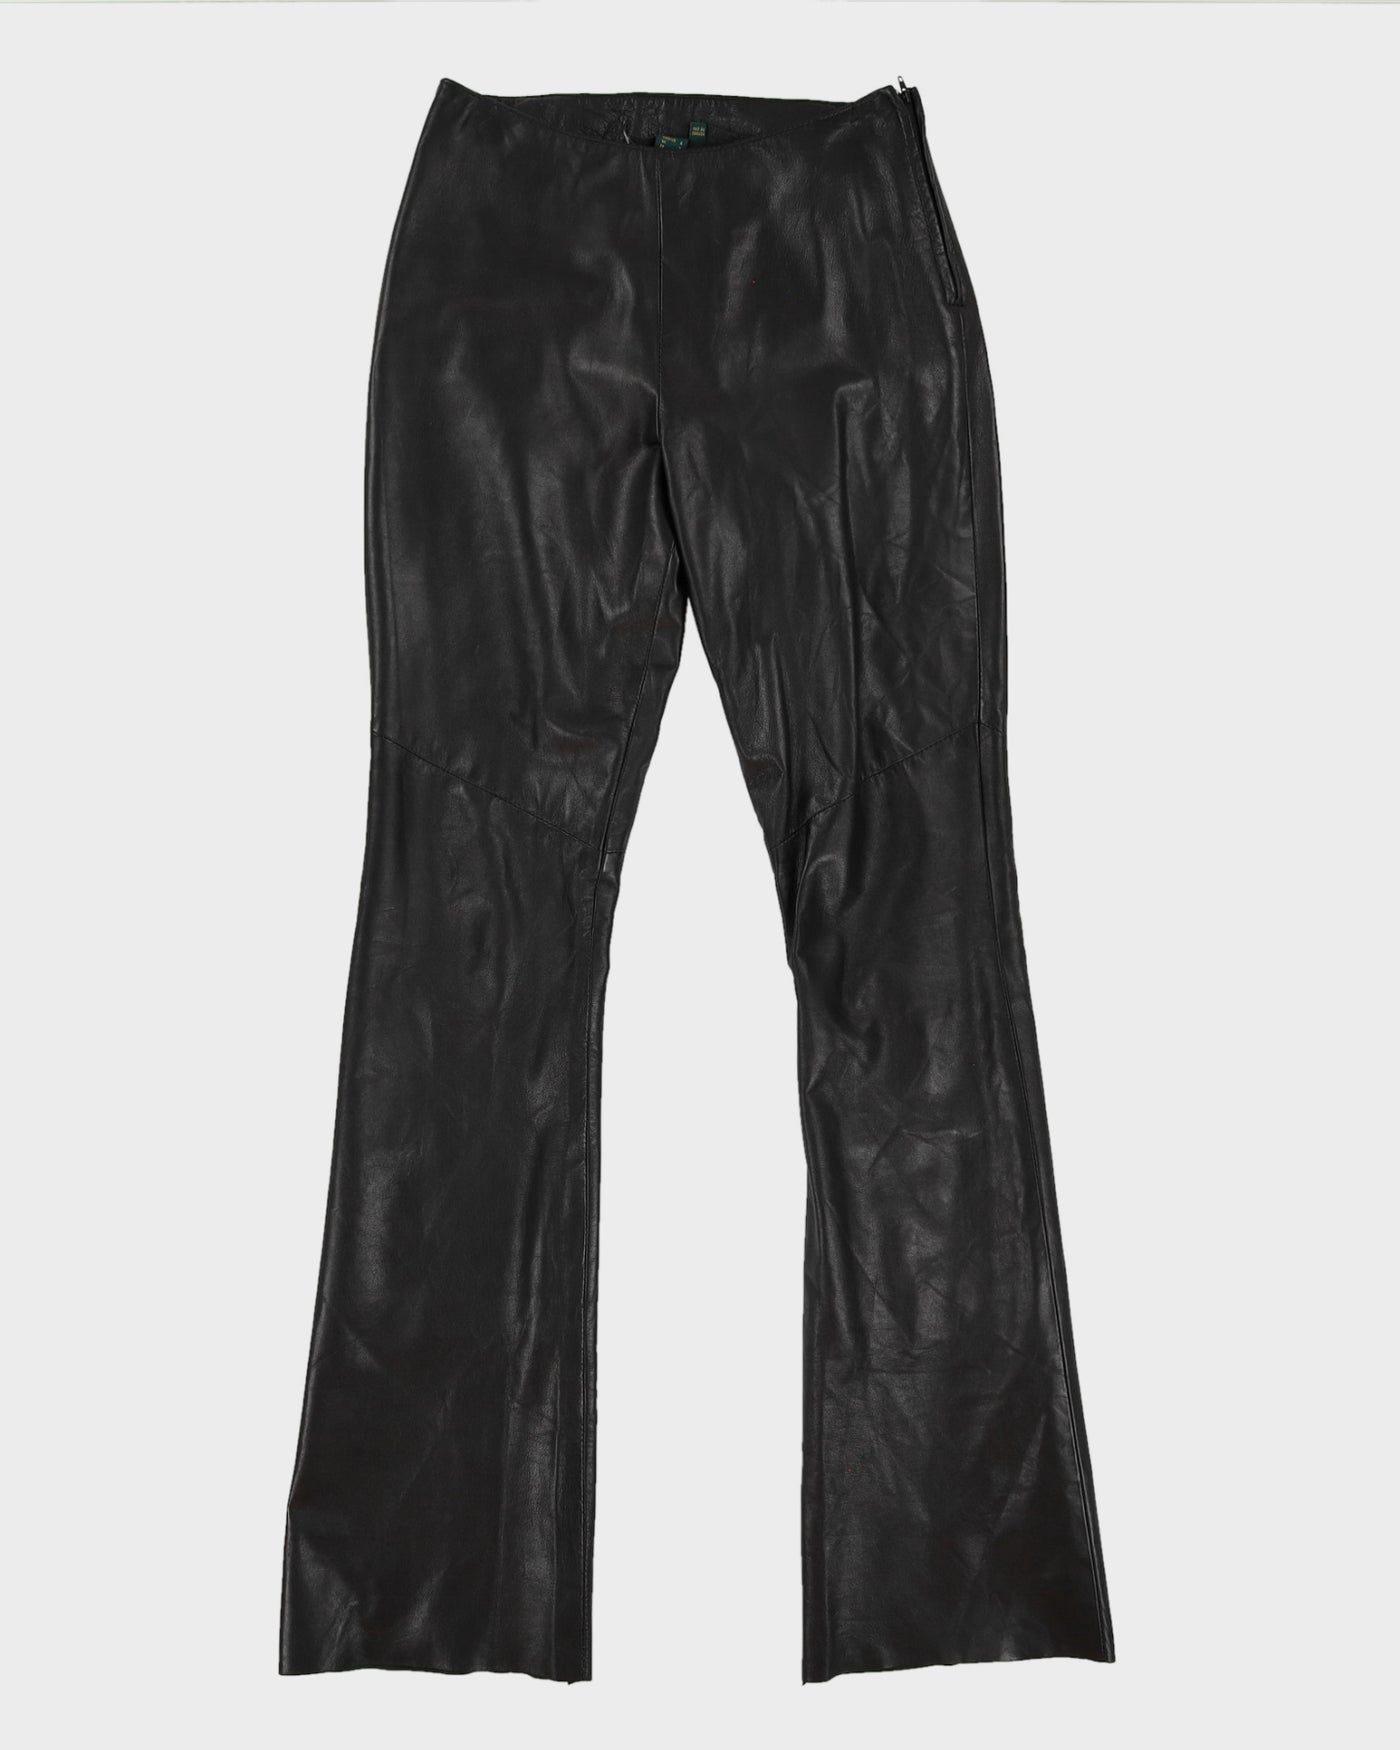 Black Leather Trousers - W27 L34